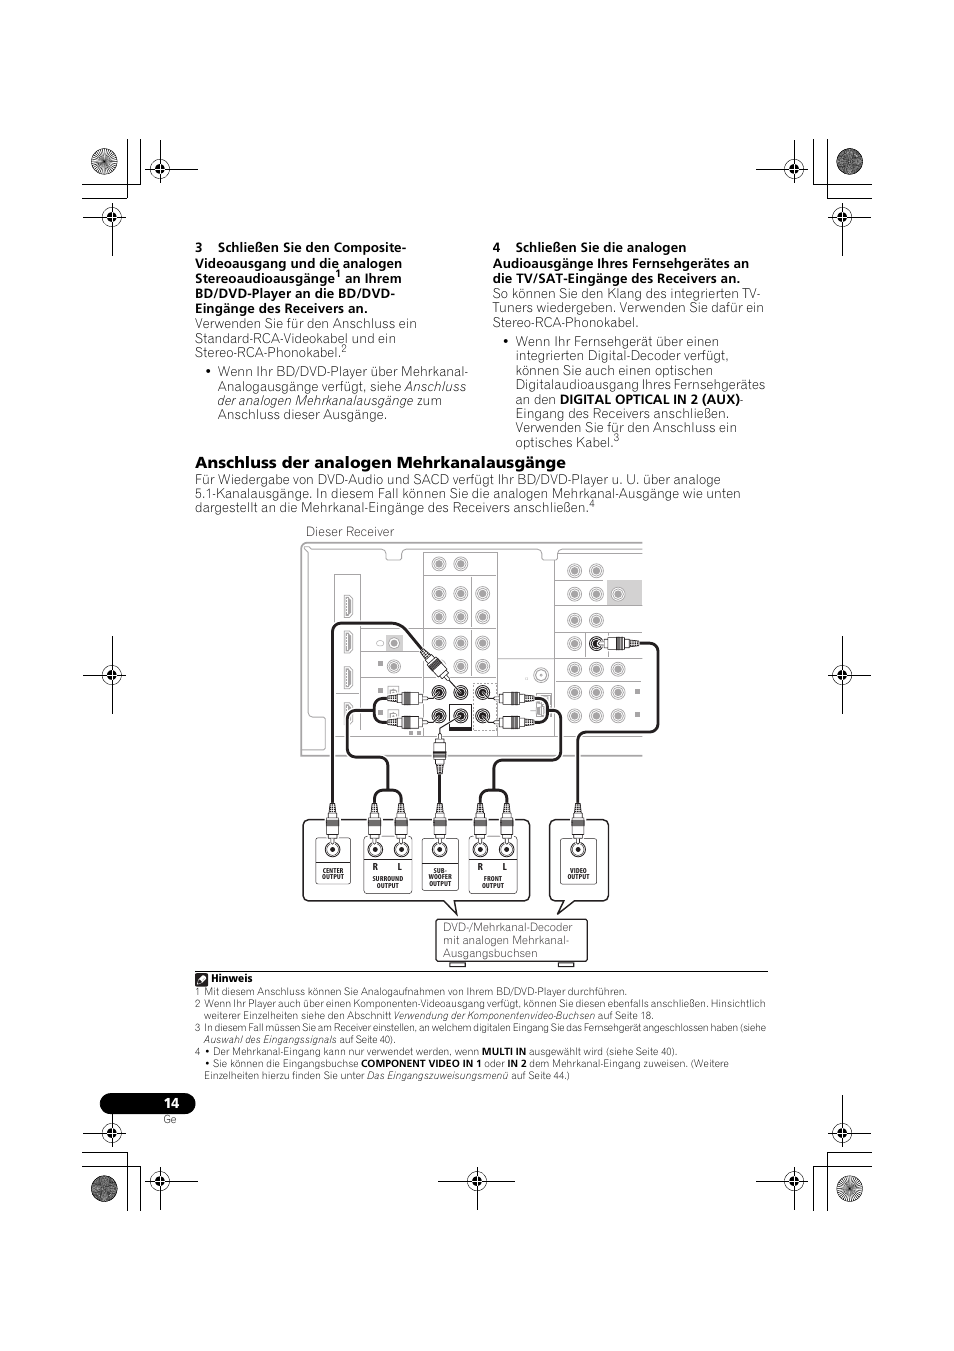 Anschluss der analogen mehrkanalausgänge, Anschluss der analogen, Mehrkanalausgänge | Dieser receiver, Hinweis | Pioneer VSX-819H-S User Manual | Page 84 / 282